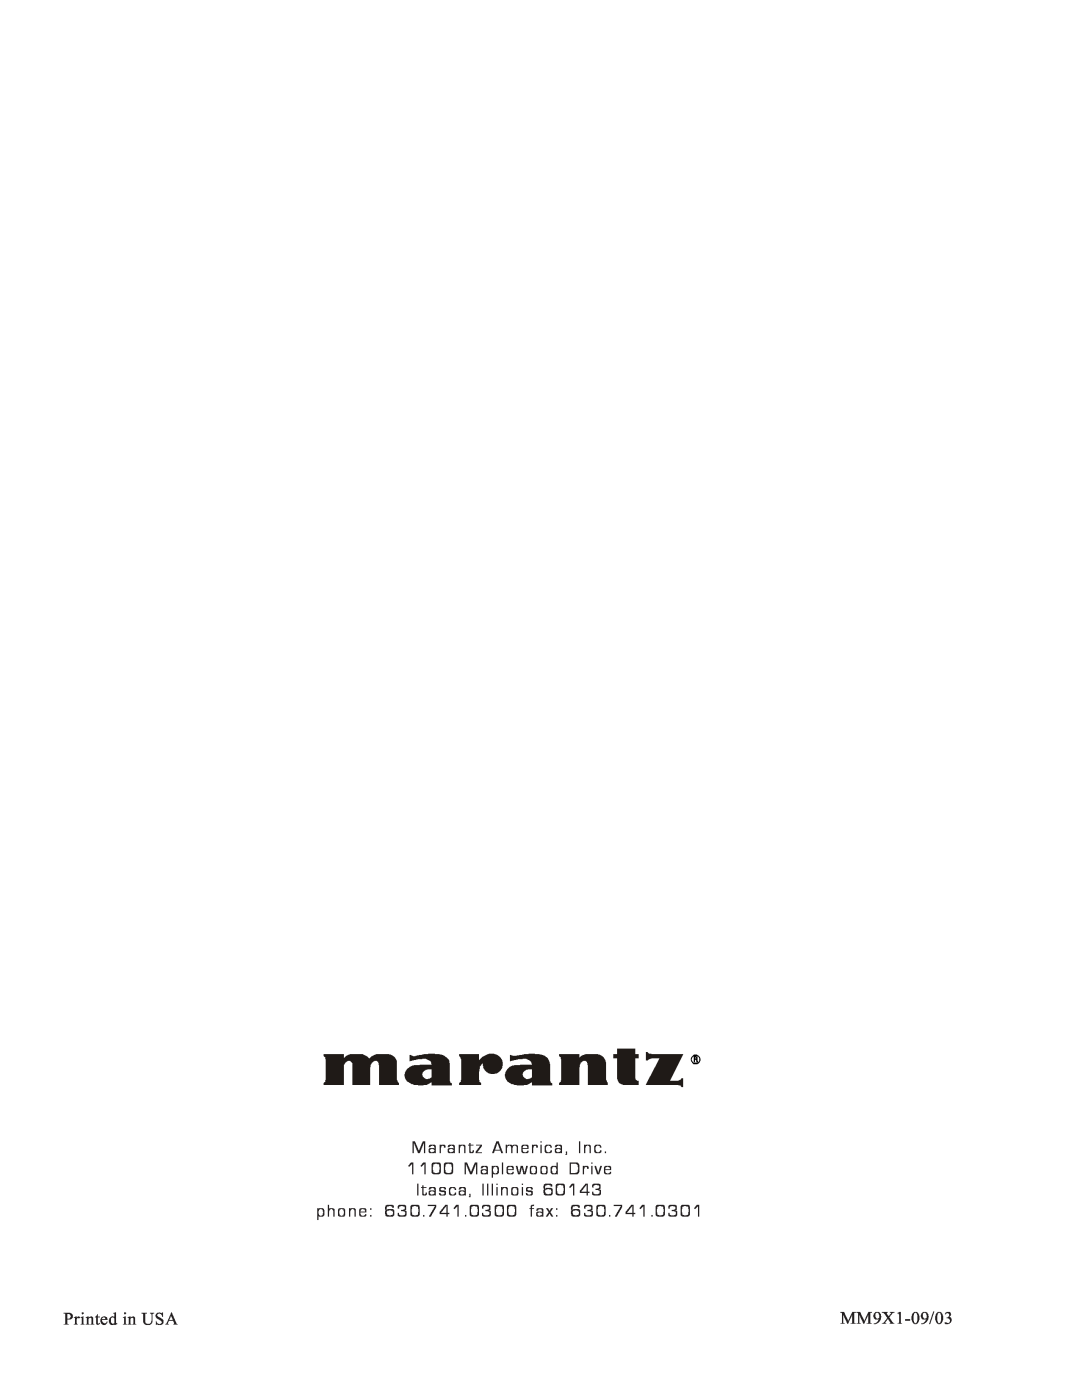 Marantz MM9360 manual Marantz America, Inc 1100 Maplewood Drive, Itasca, Illinois phone 630.741.0300 fax, MM9X1-09/03 